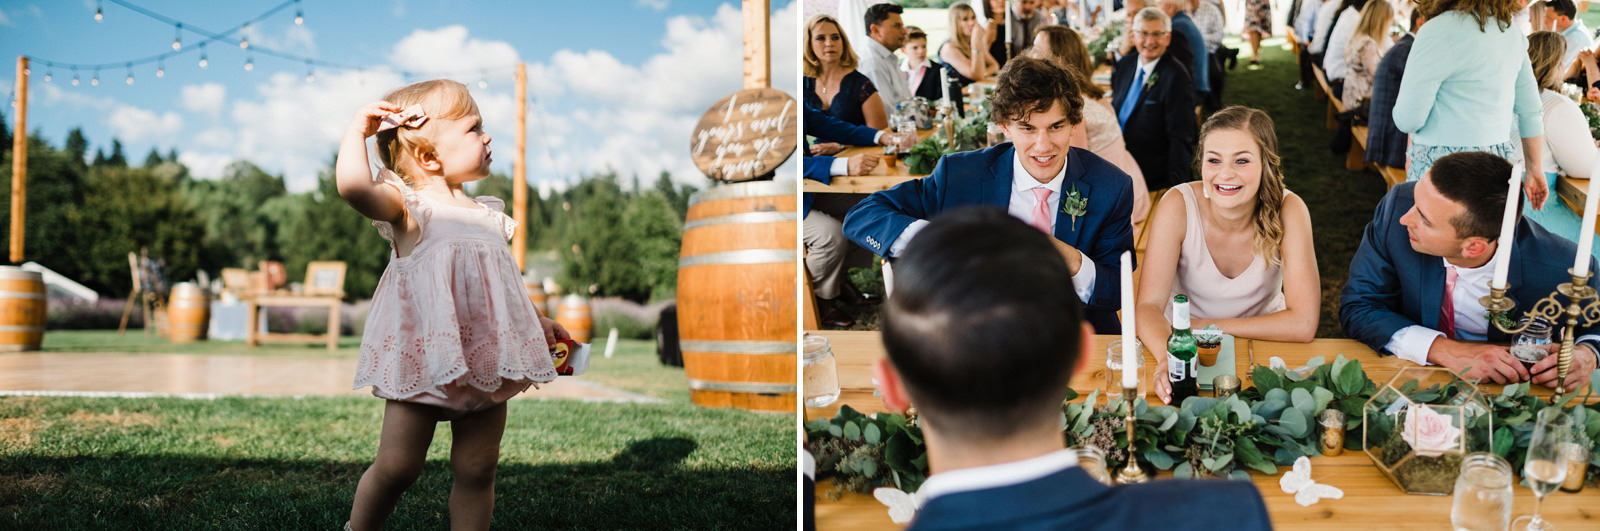 060-woodinville-lavendar-farm-wedding-with-golden-glowy-photos.jpg